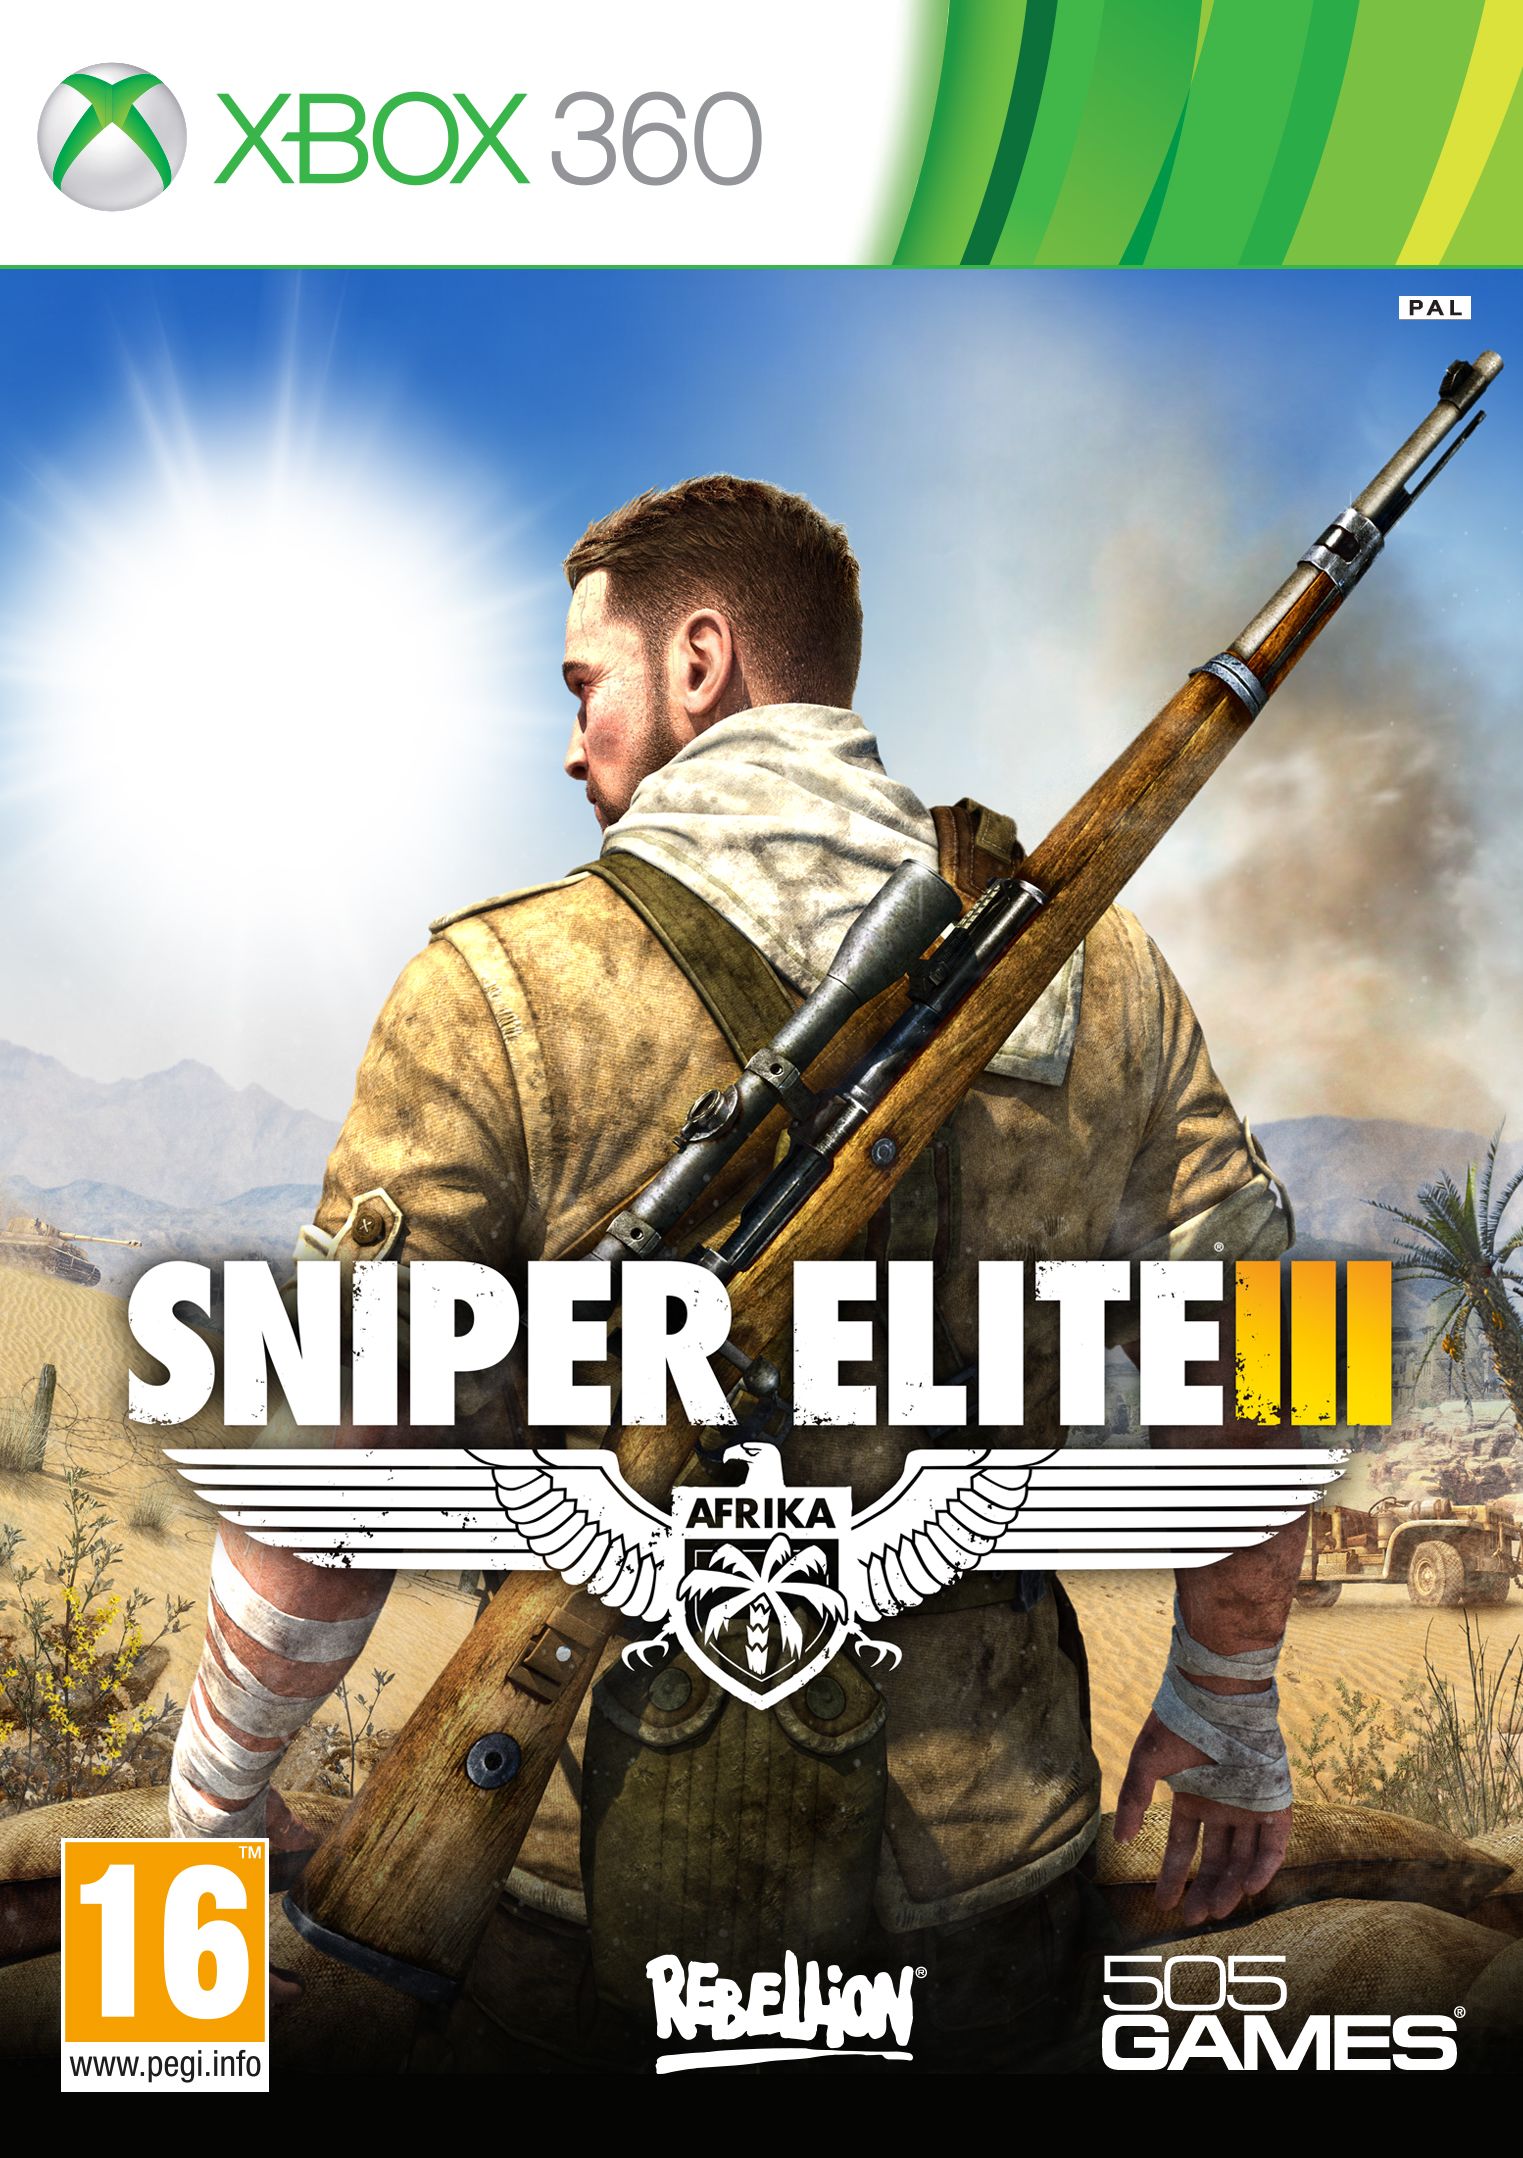 Acheter Sniper Elite 3 - Xbox 360 prix promo neuf et occasion pas cher